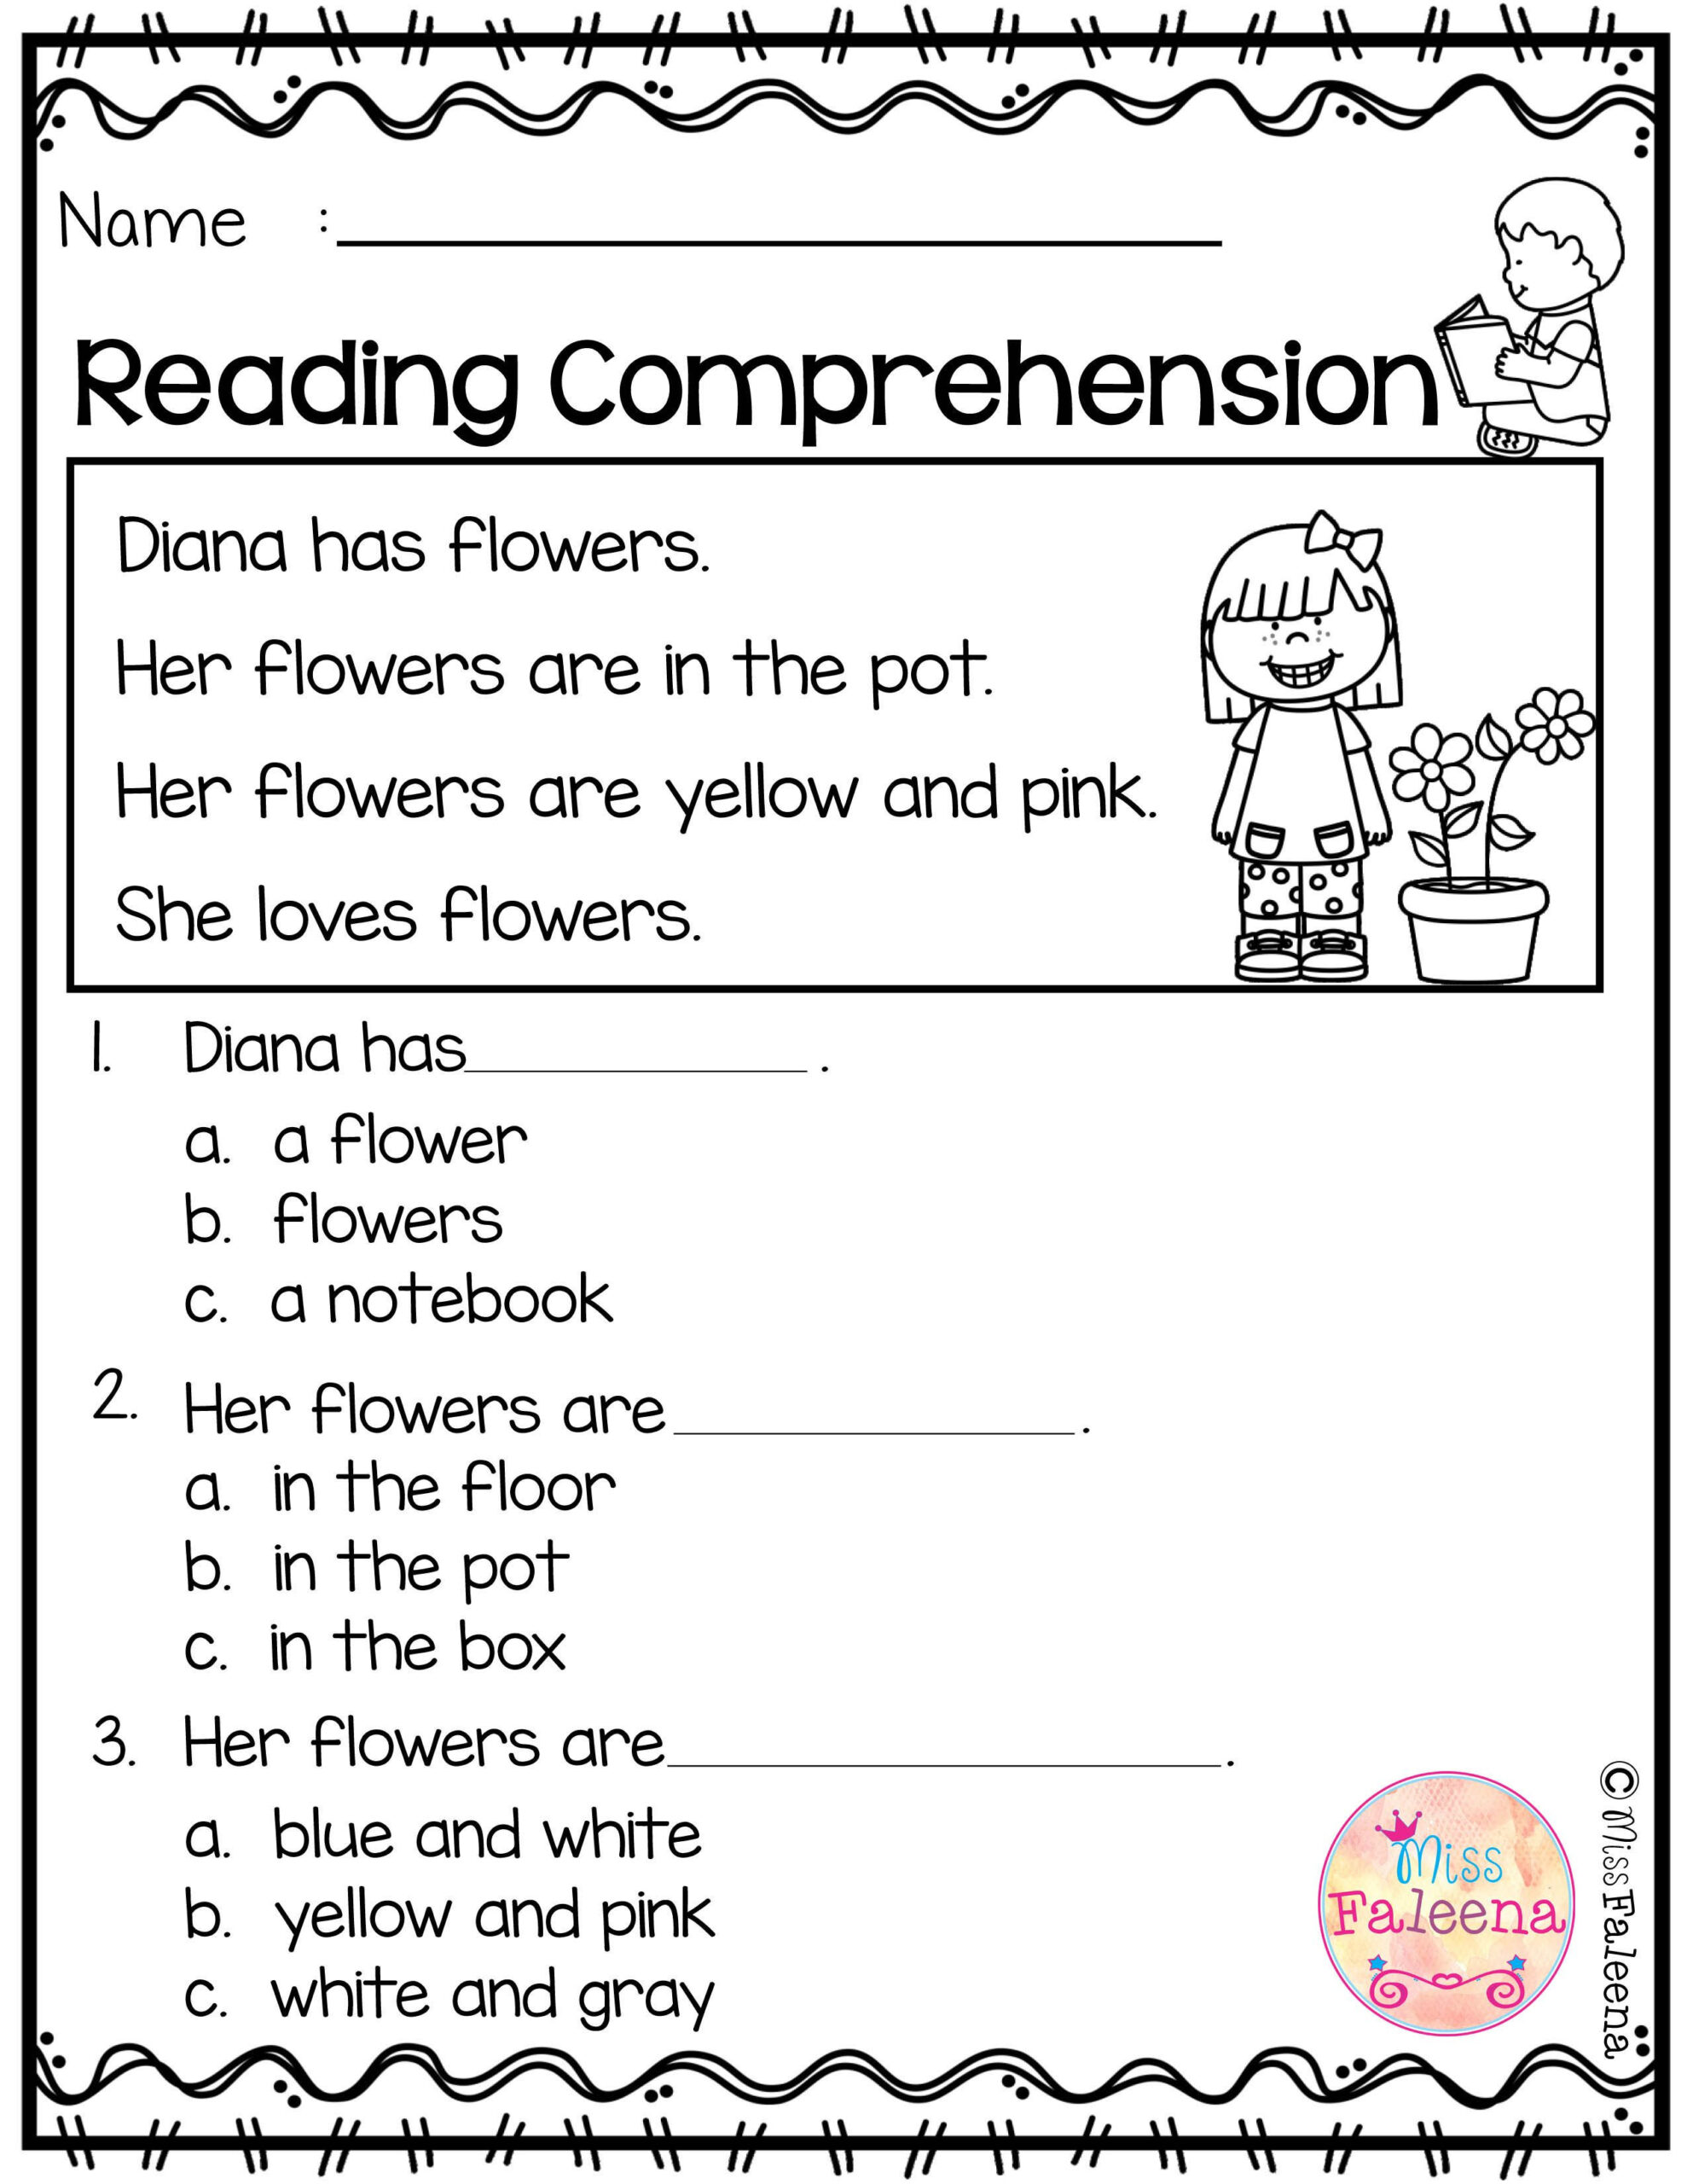 Free Reading Comprehension Reading Comprehension Worksheets Reading 